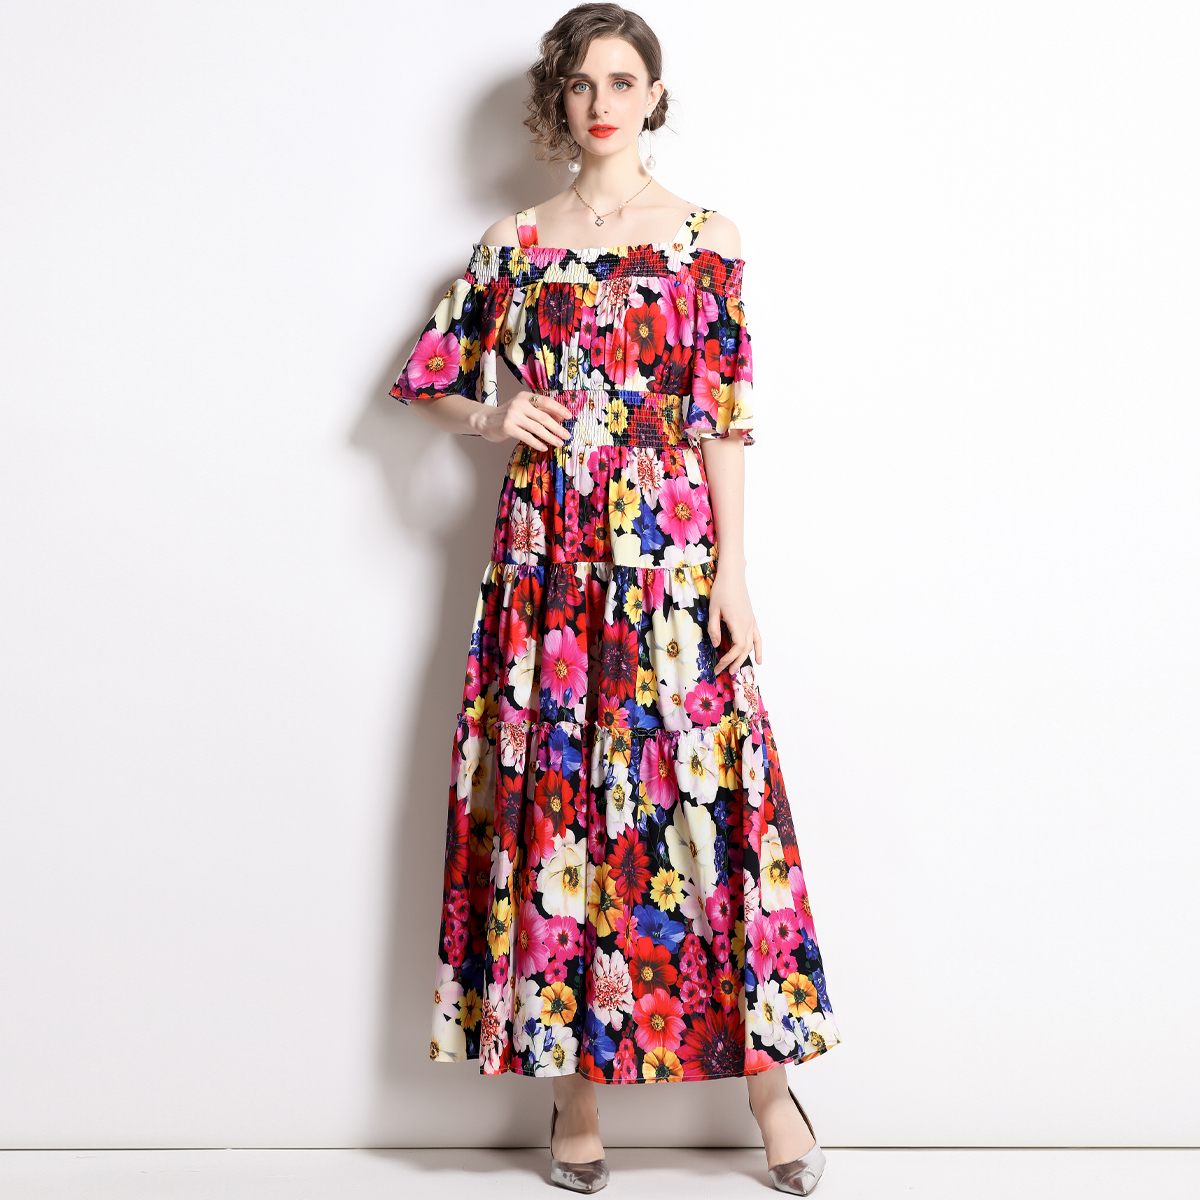 Printing flat shoulder rose retro dress for women